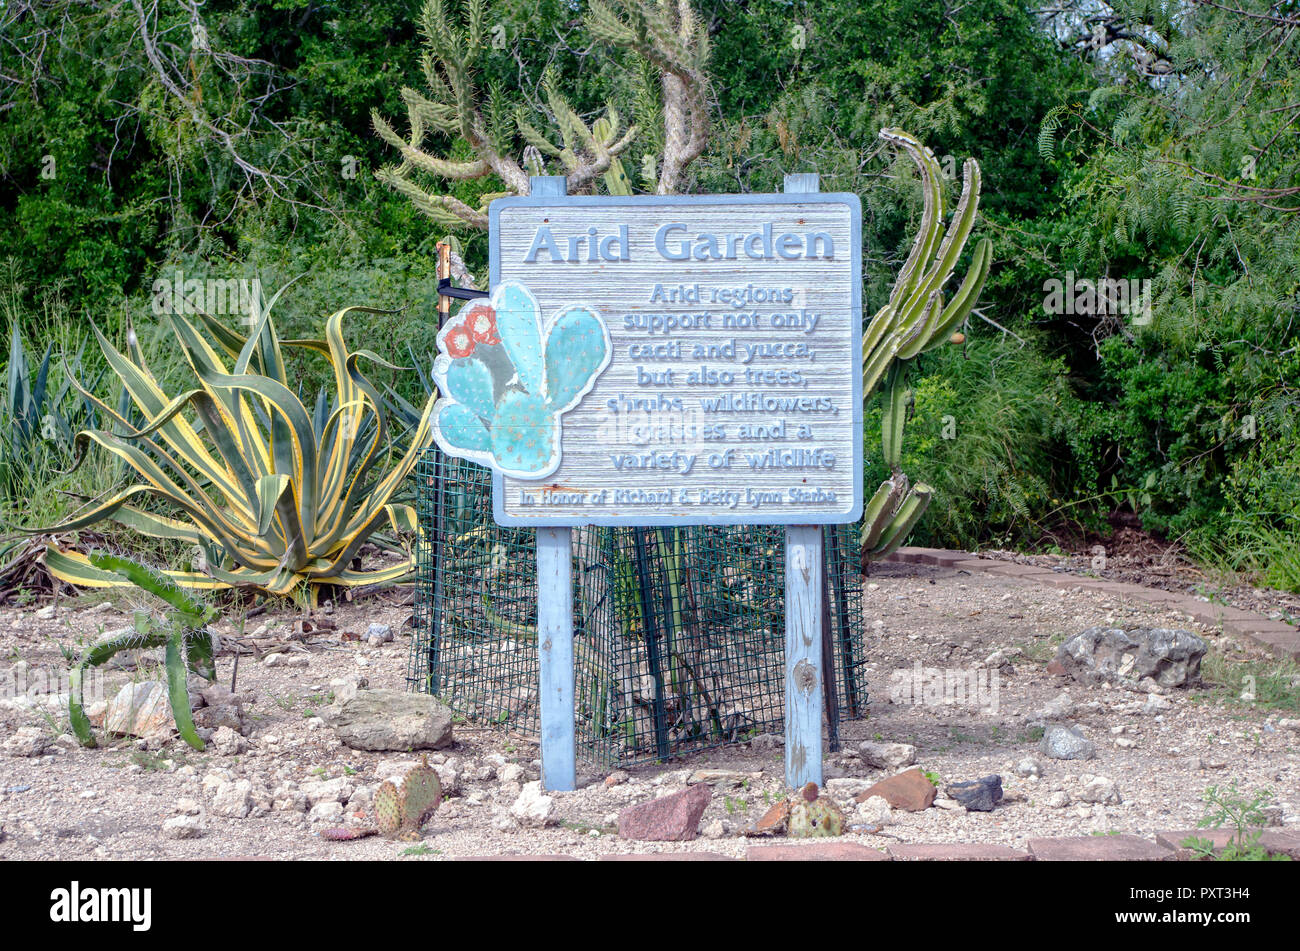 Arid Garden sign at the South Texas Botanical Gardens and Nature Center in Corpus Christi, Texas USA. Stock Photo